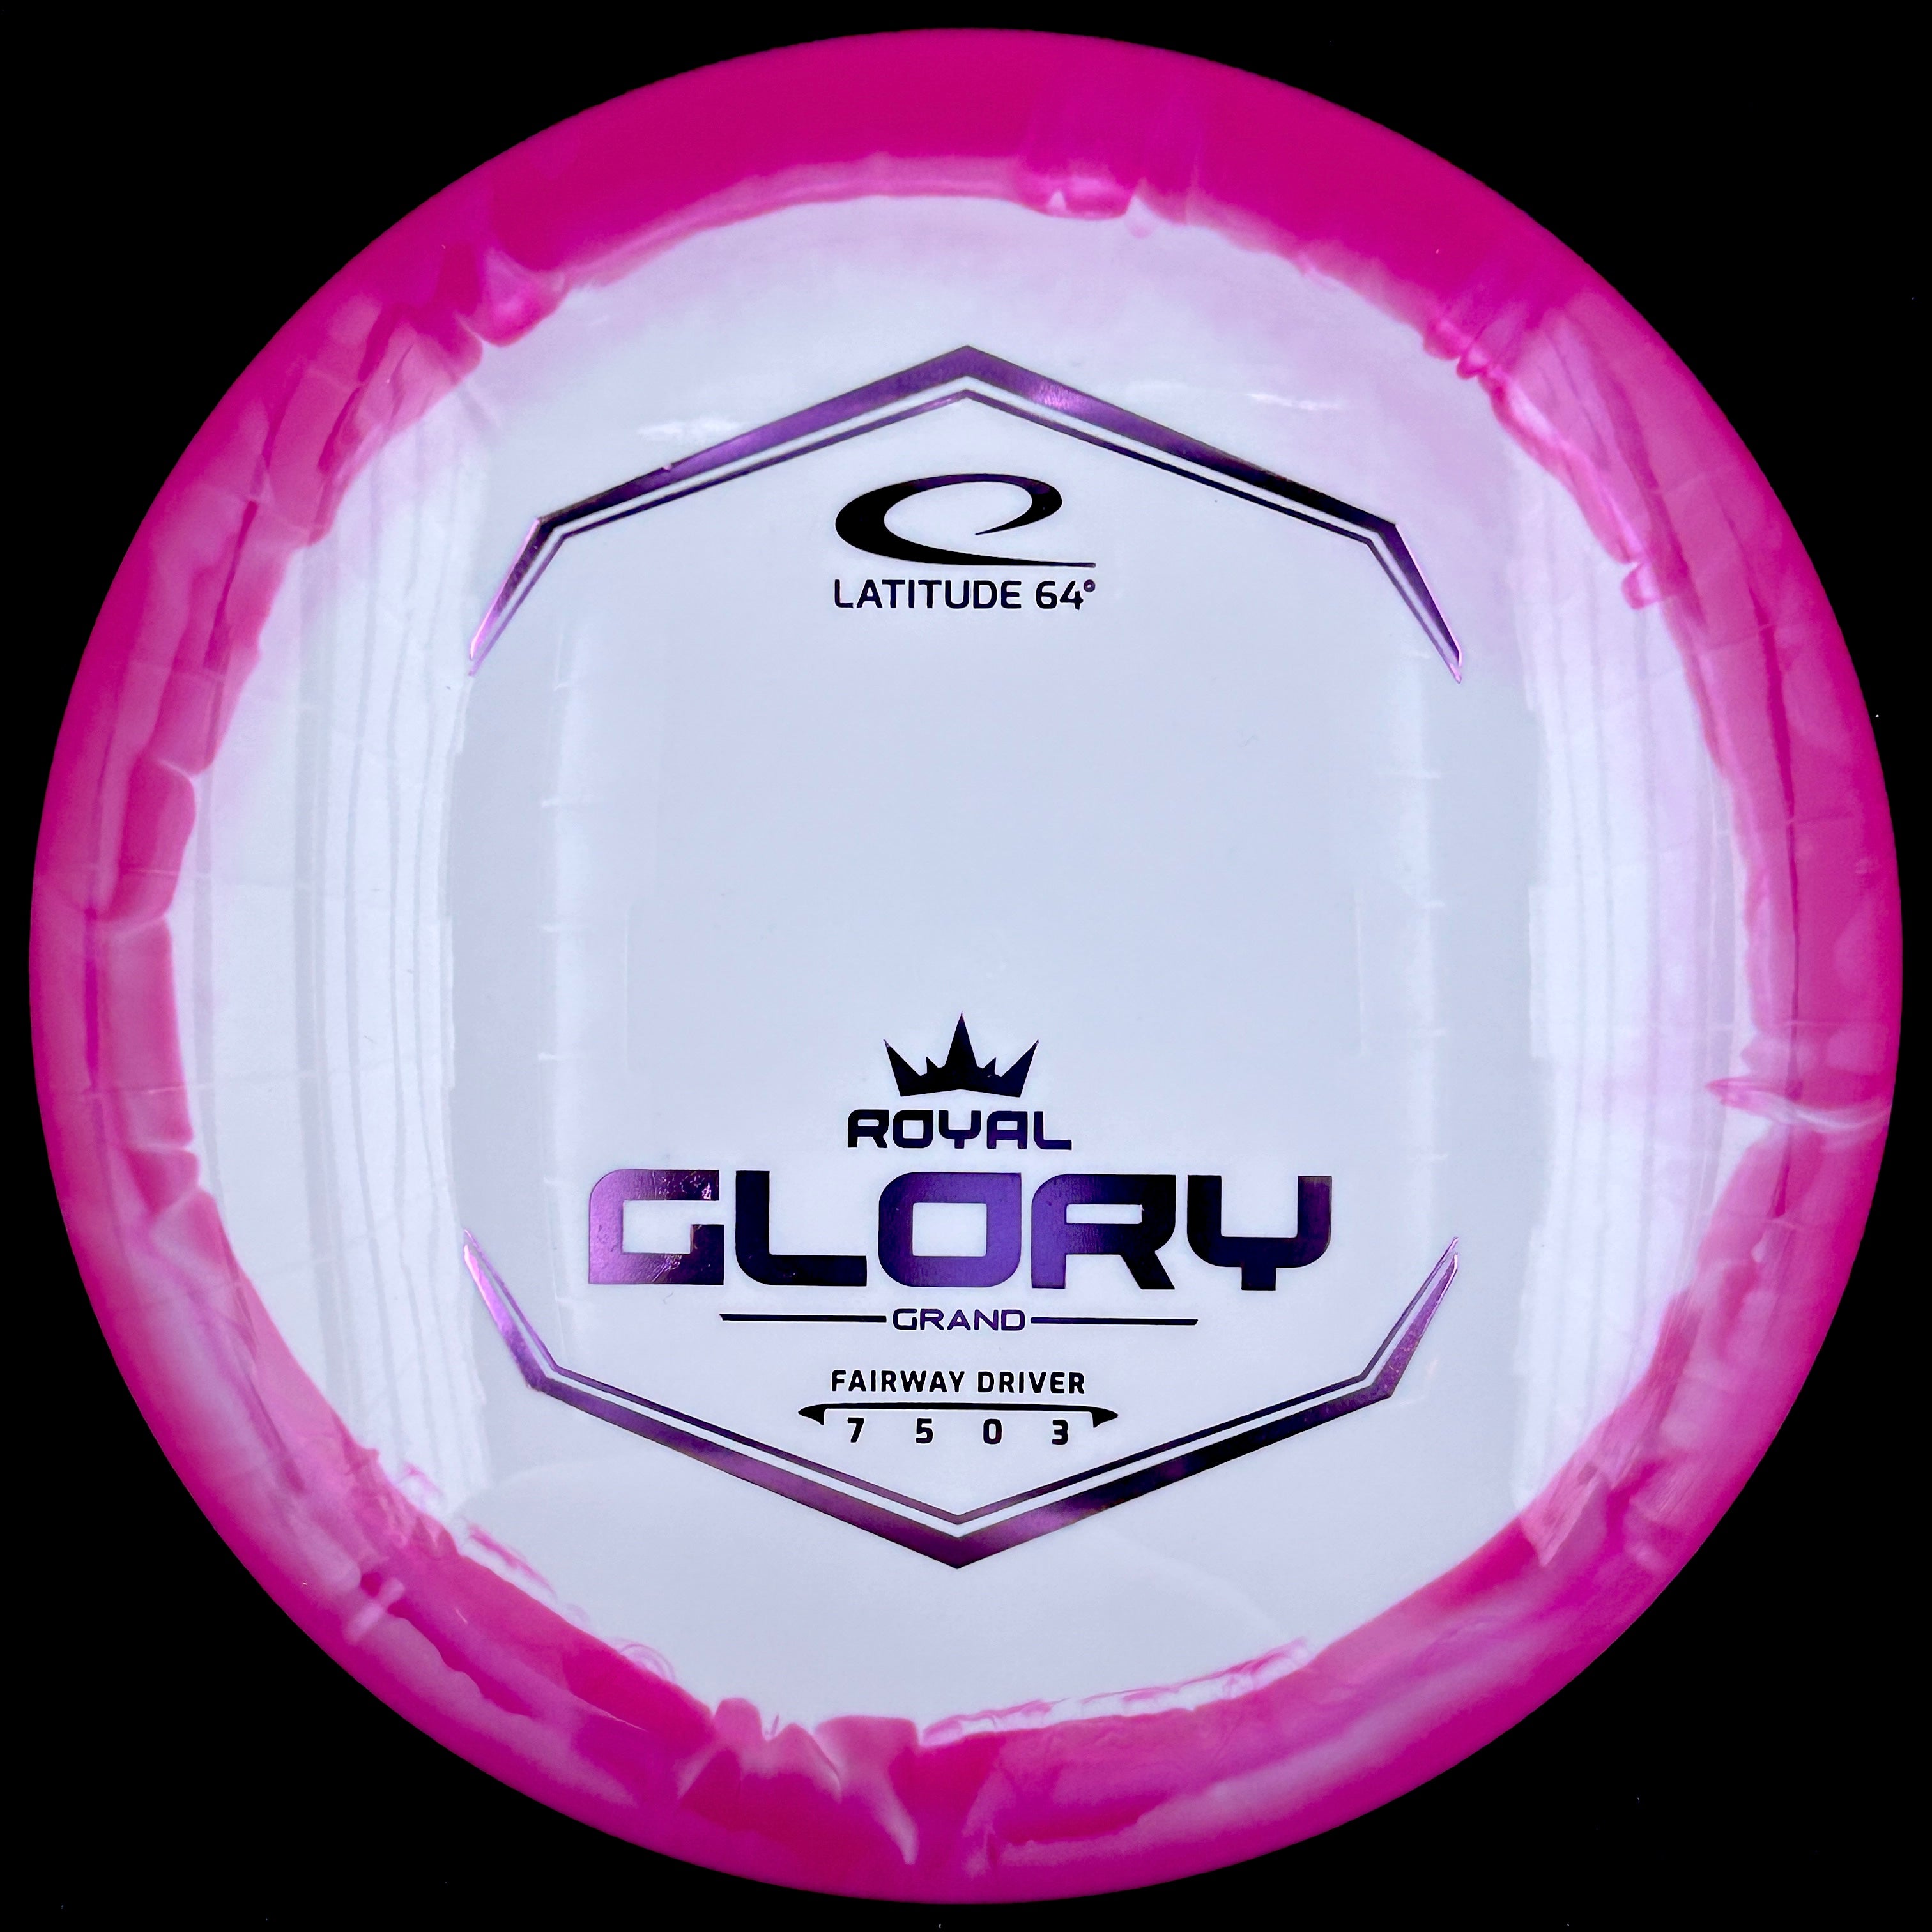 Latitude 64 Royal Grand Orbit Glory (Fairway Driver)